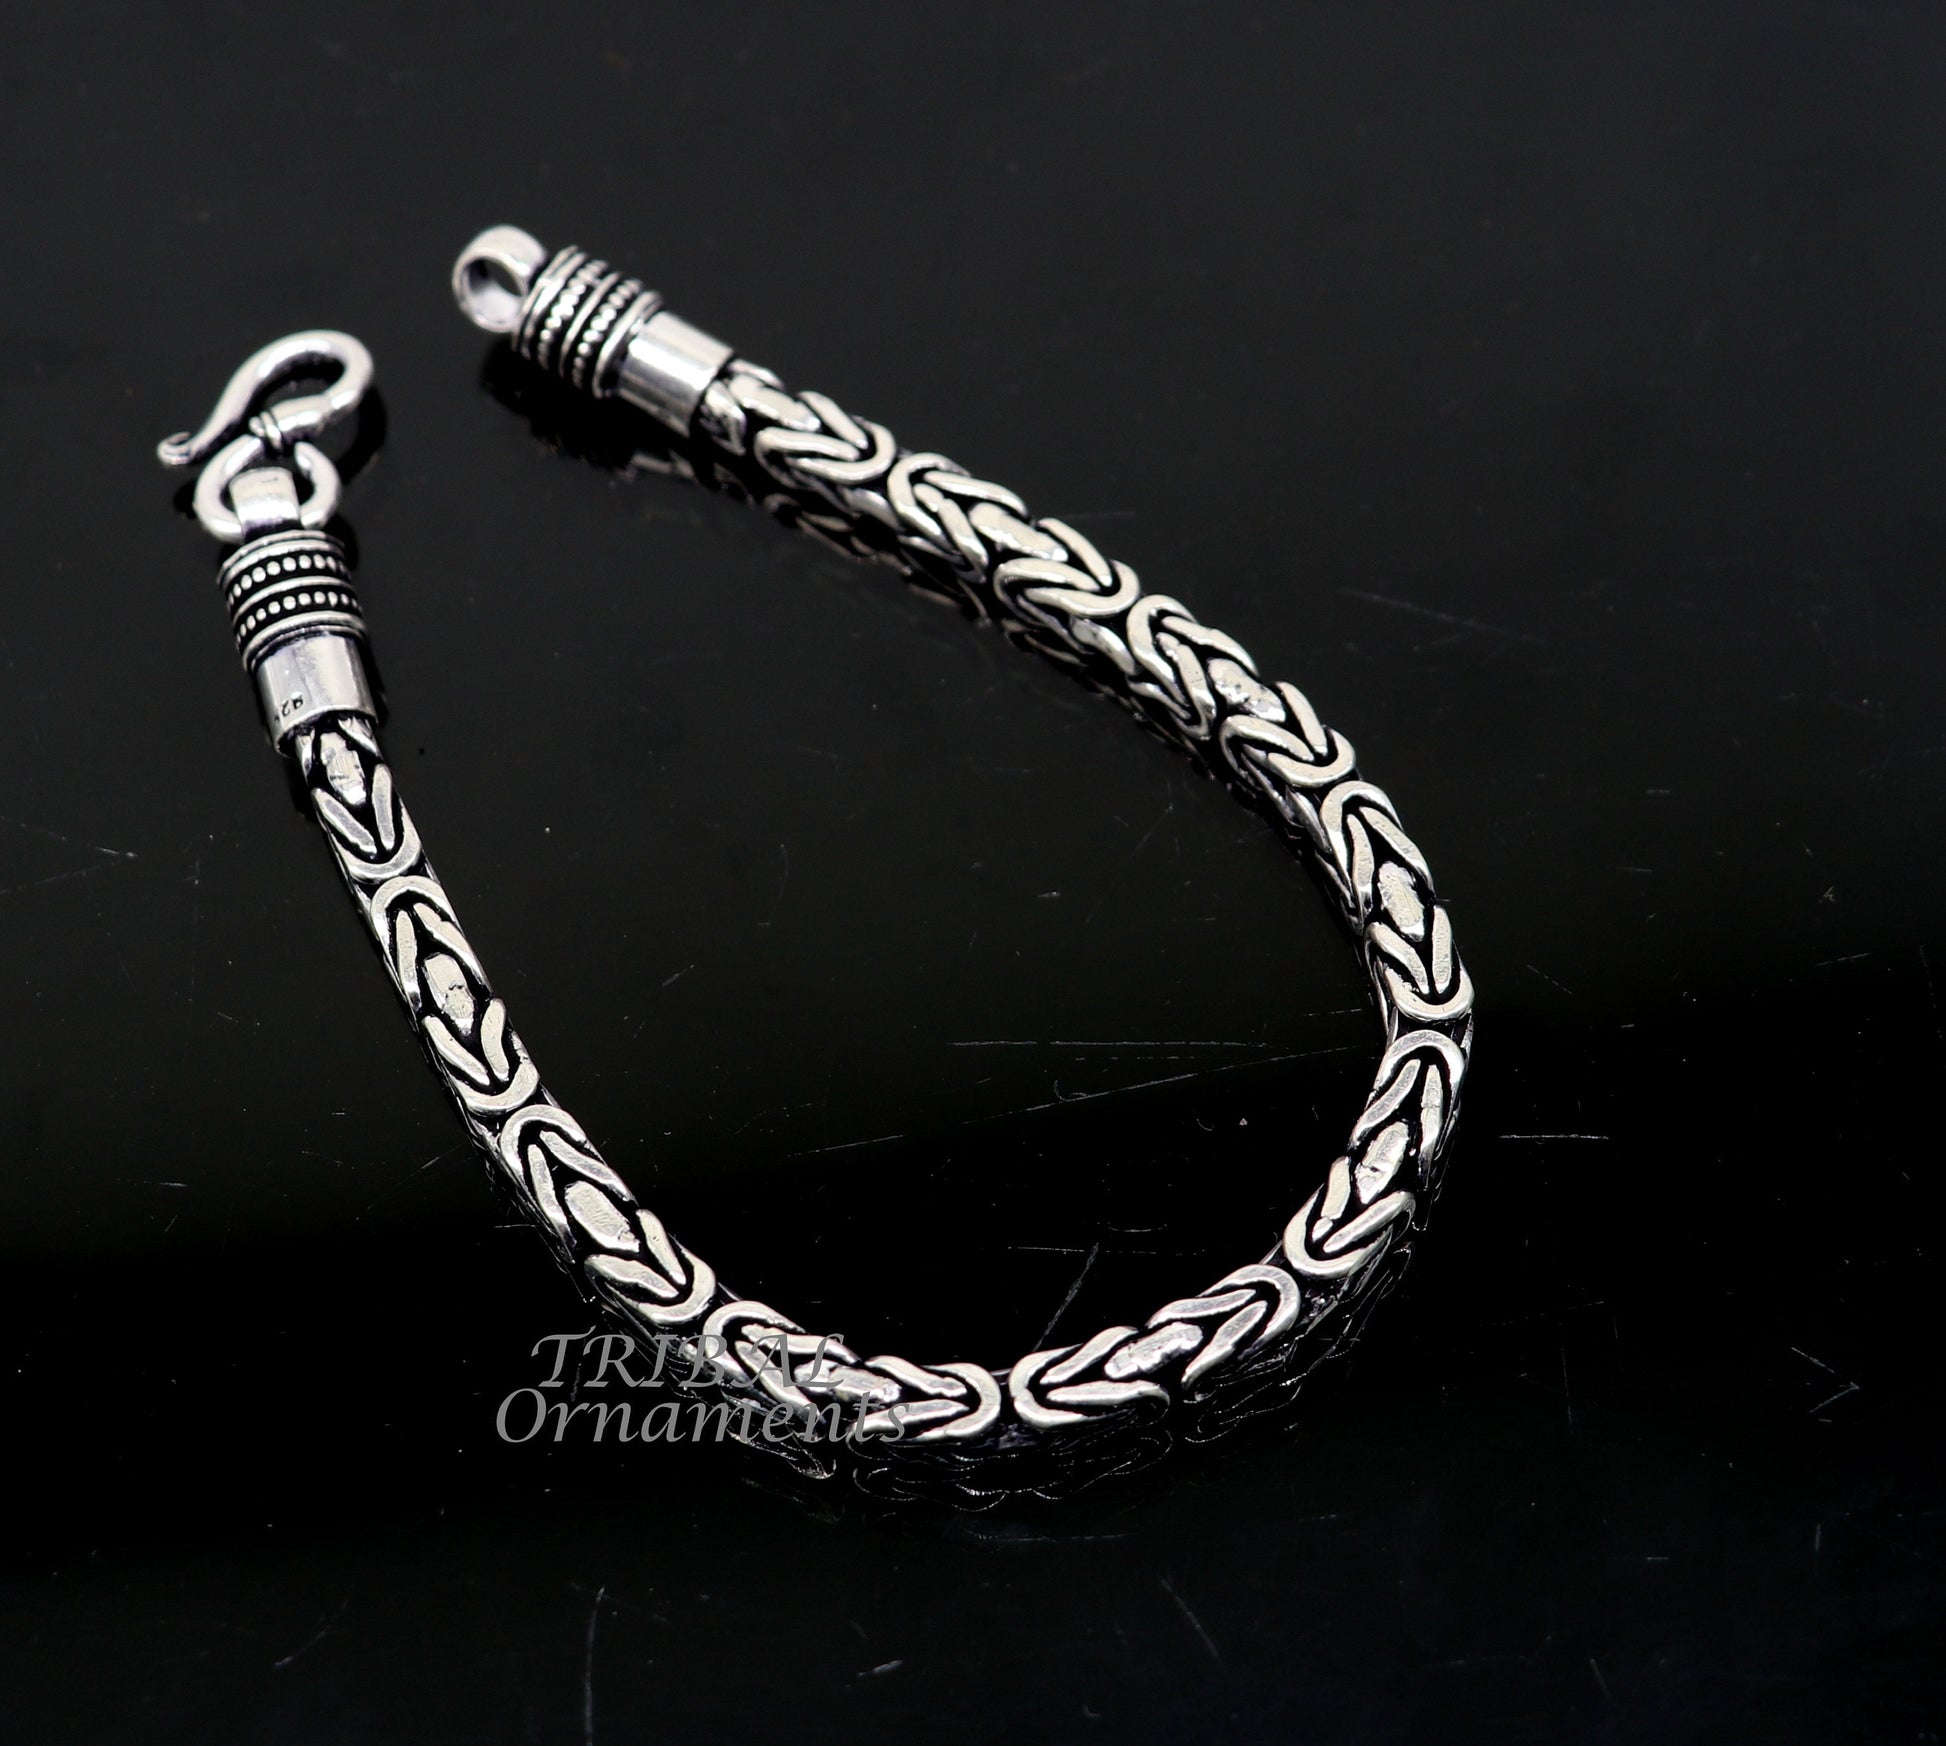 5mm 9"/9.5" Unique byzantine vintage design 925 Sterling silver handmade chain bracelet flexible bracelet unisex jewelry from india  sbr430 - TRIBAL ORNAMENTS